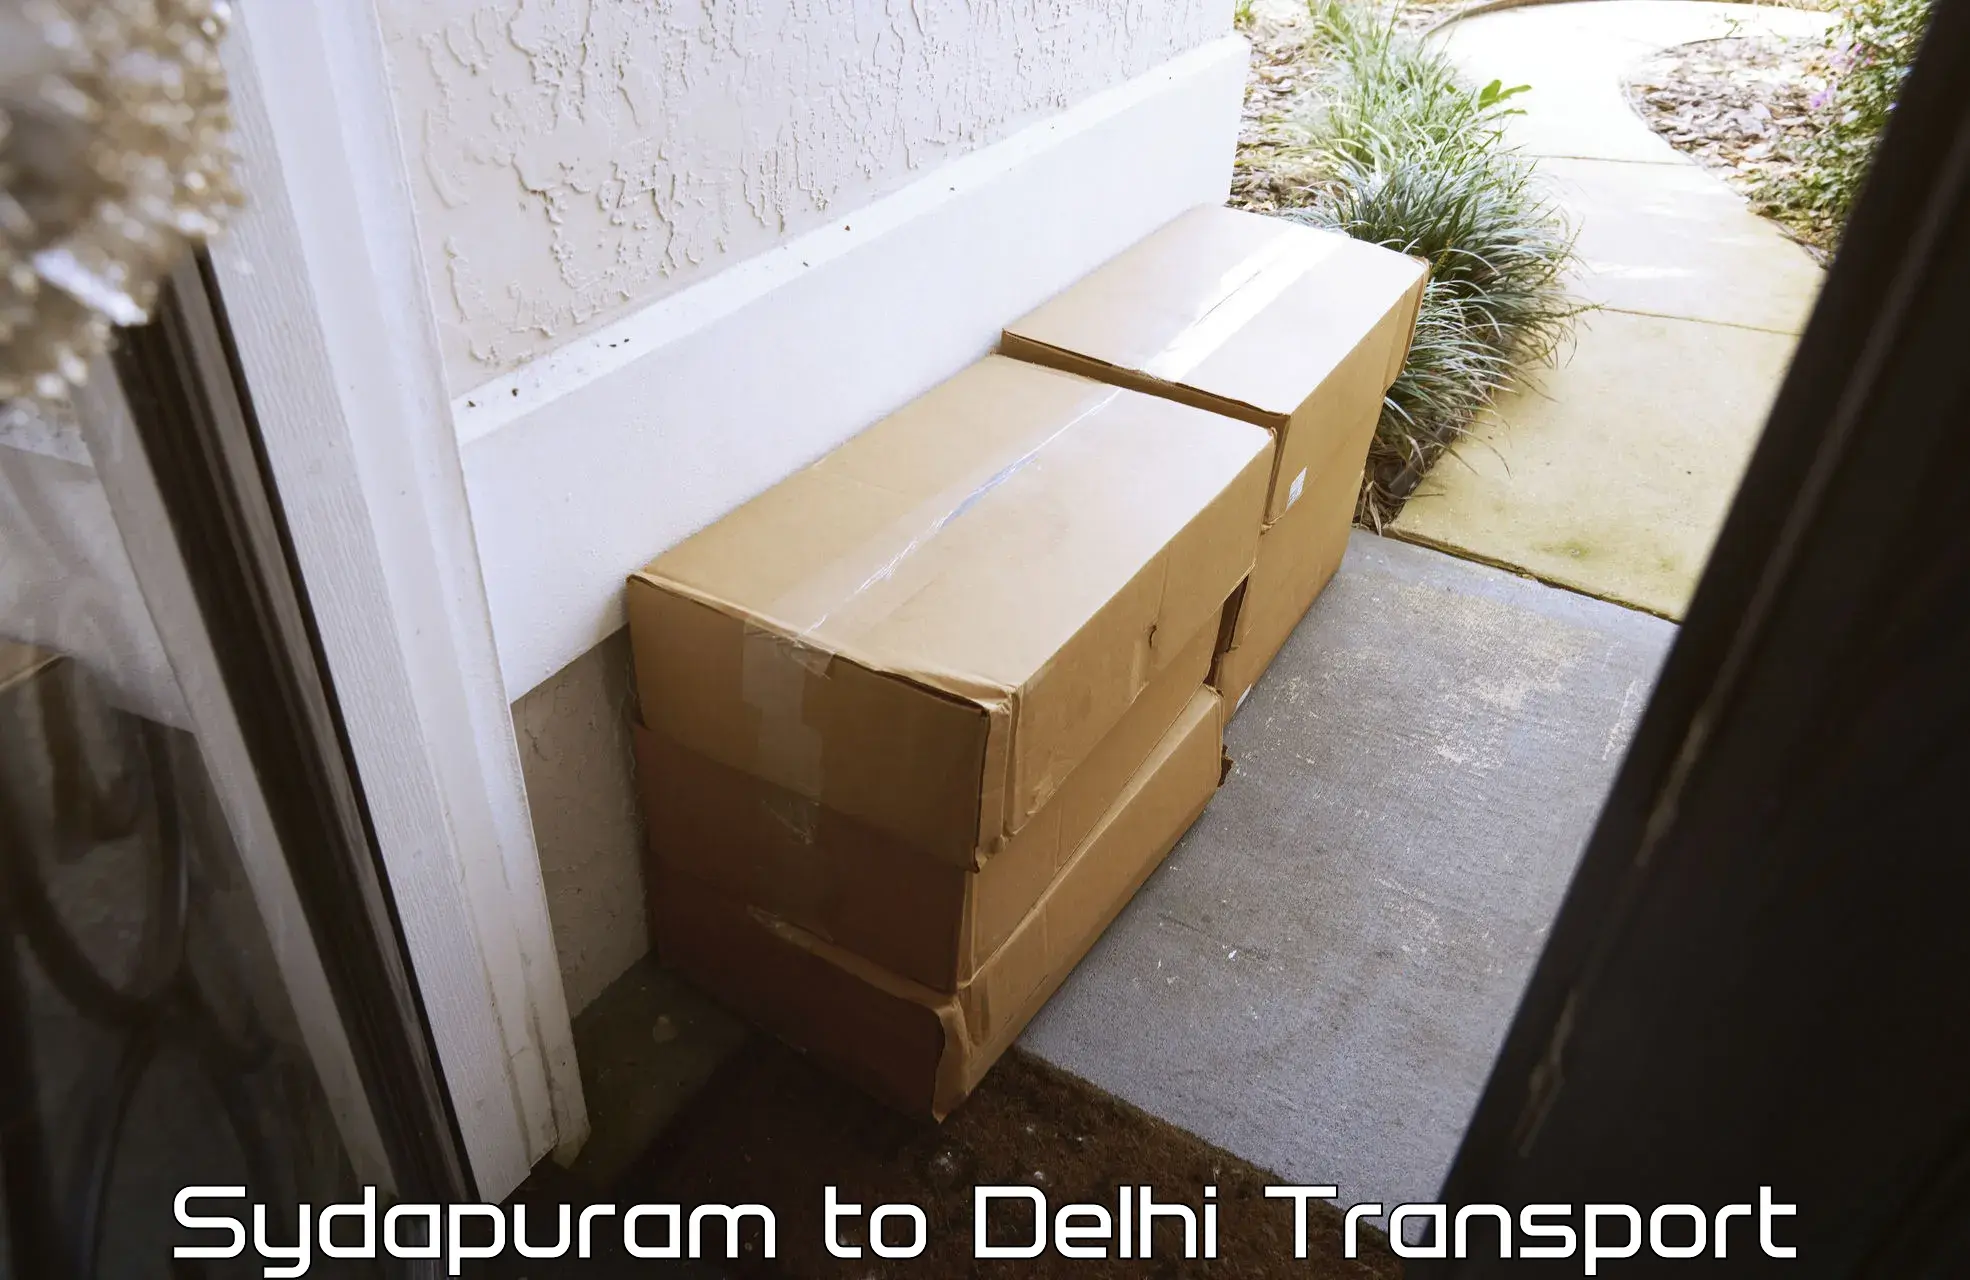 Goods delivery service Sydapuram to East Delhi